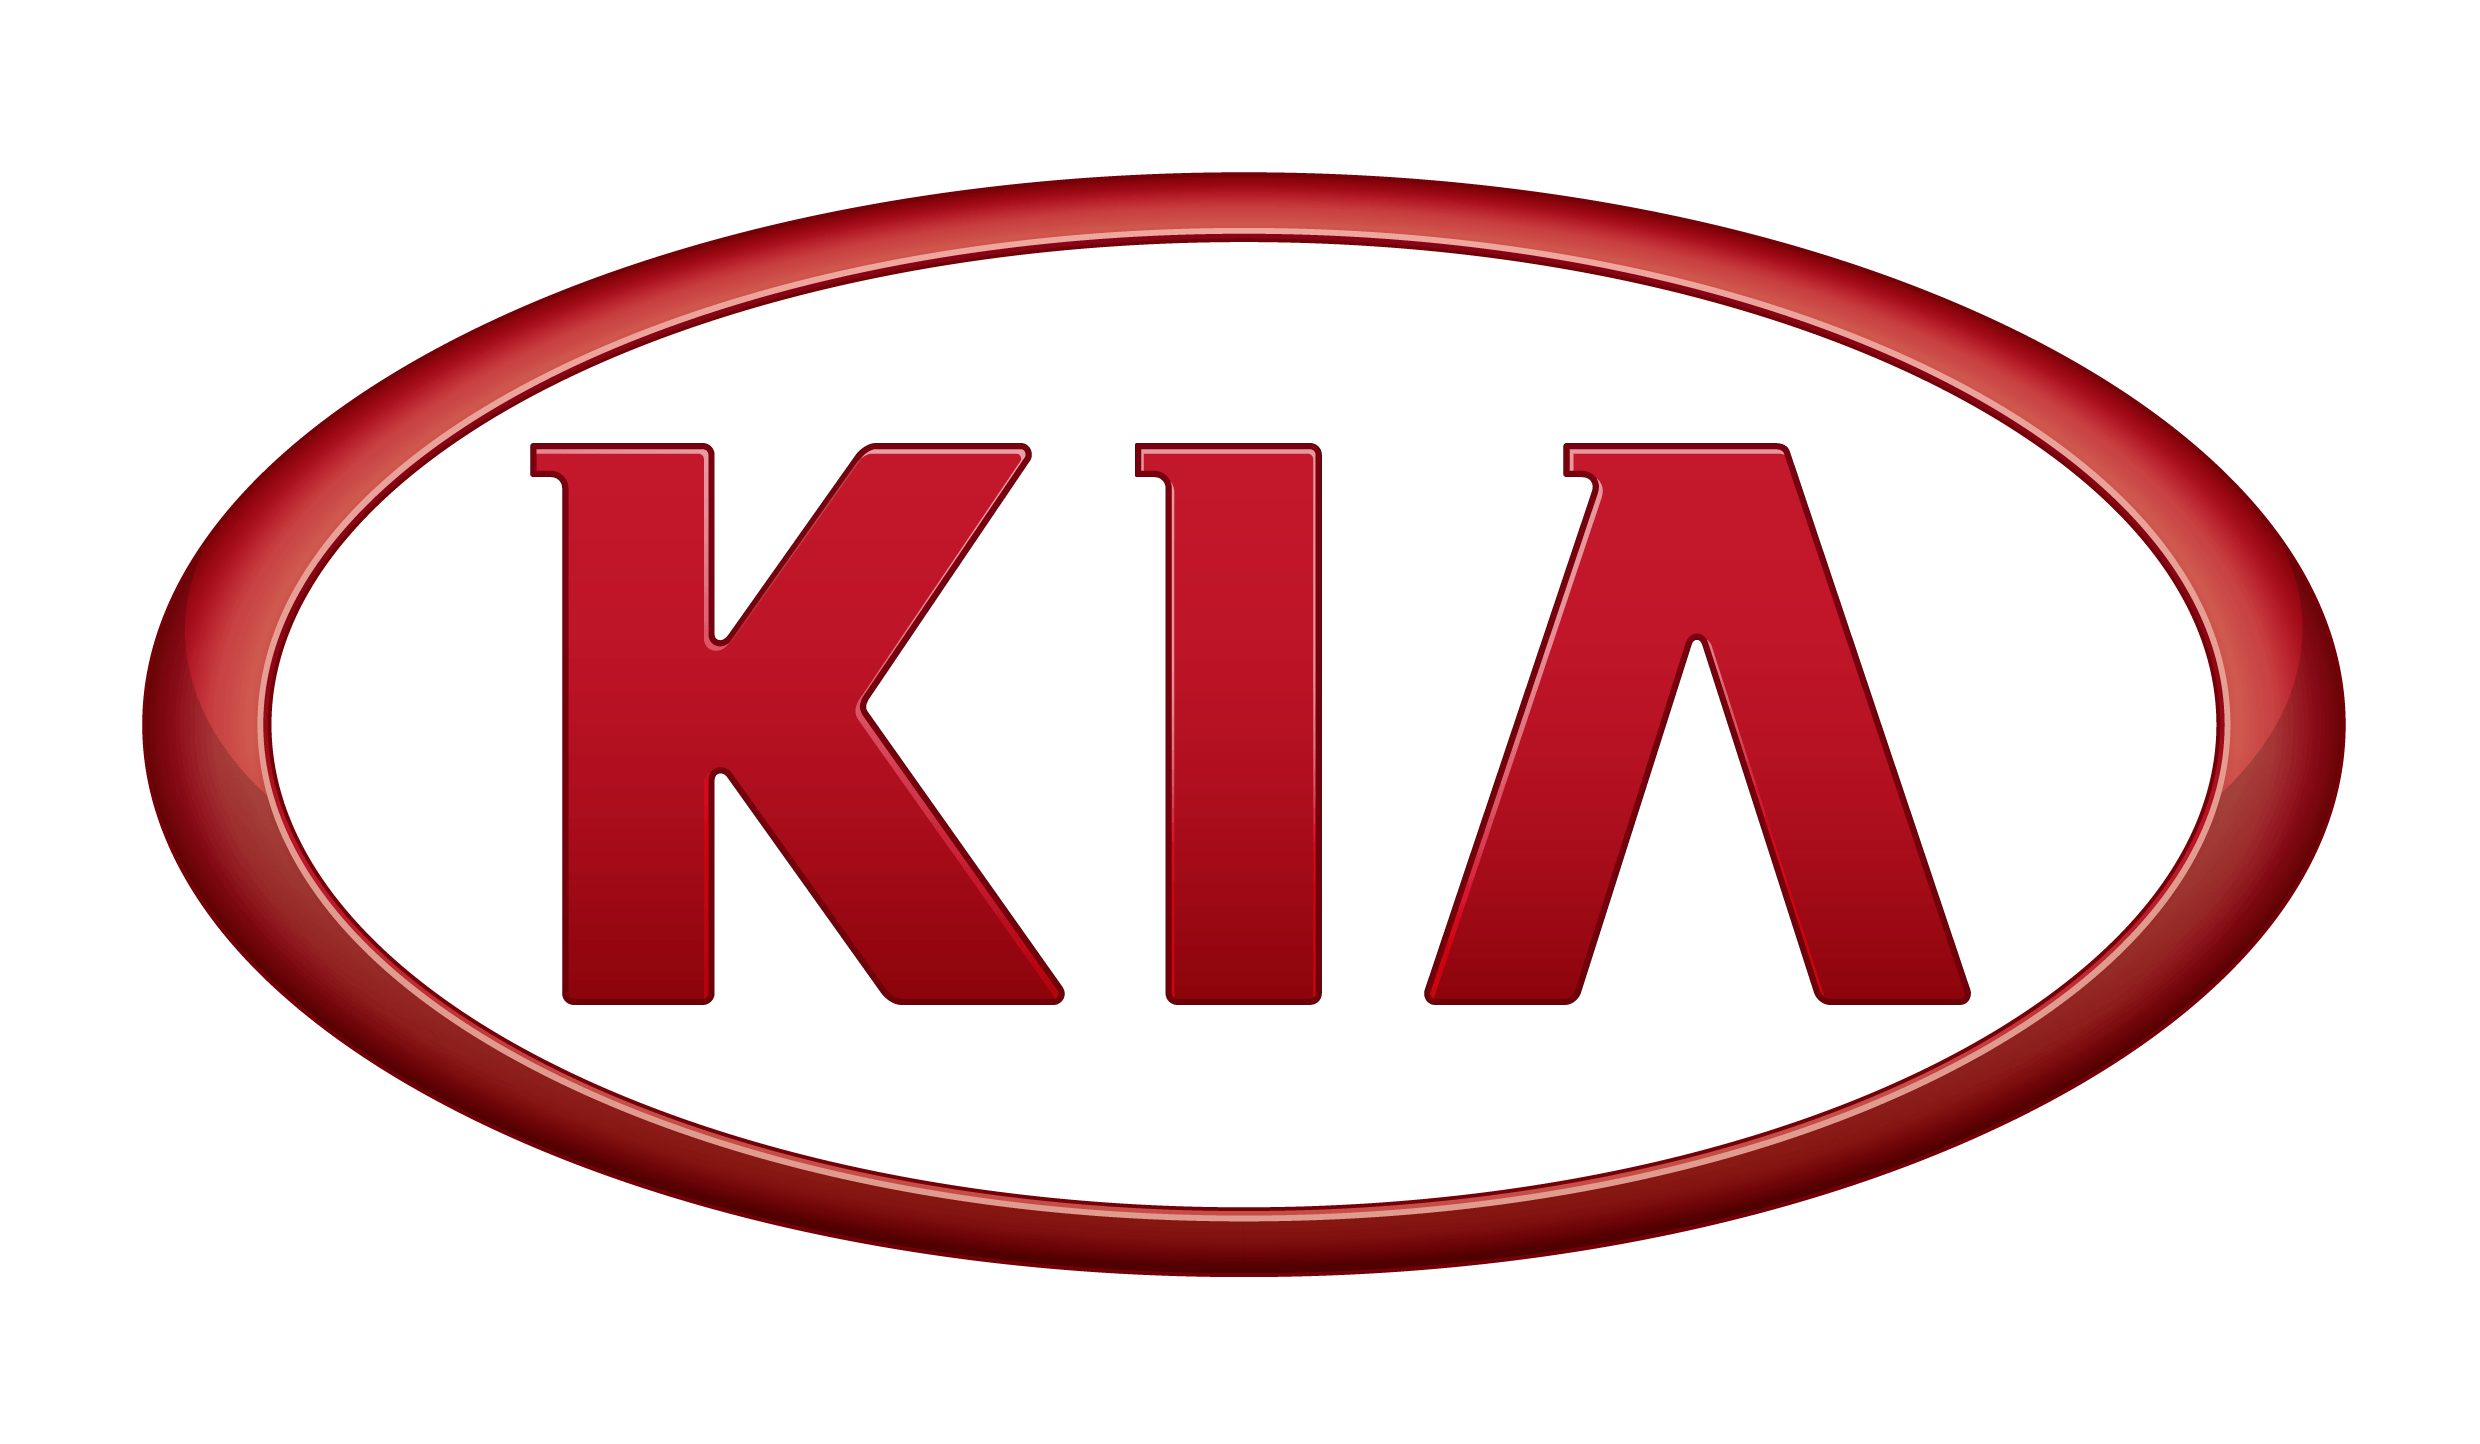 Red Letter Brand Names Logo - Kia Logo, Kia Car Symbol Meaning and History | Car Brand Names.com